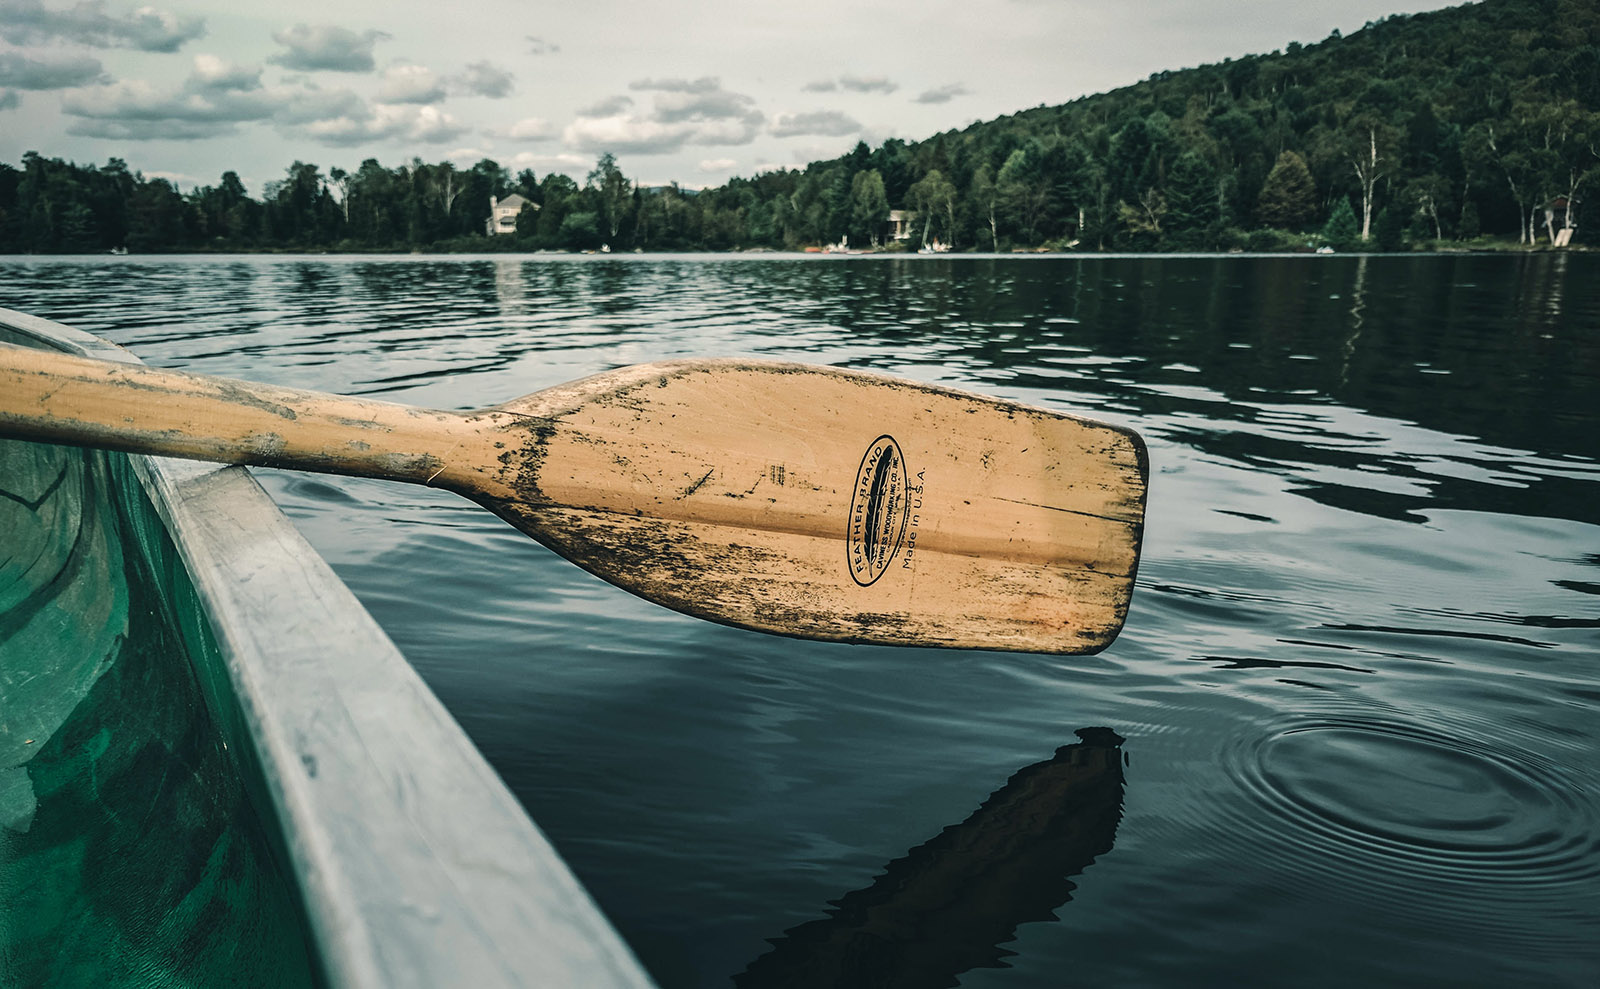  a canoe on a glassy lake